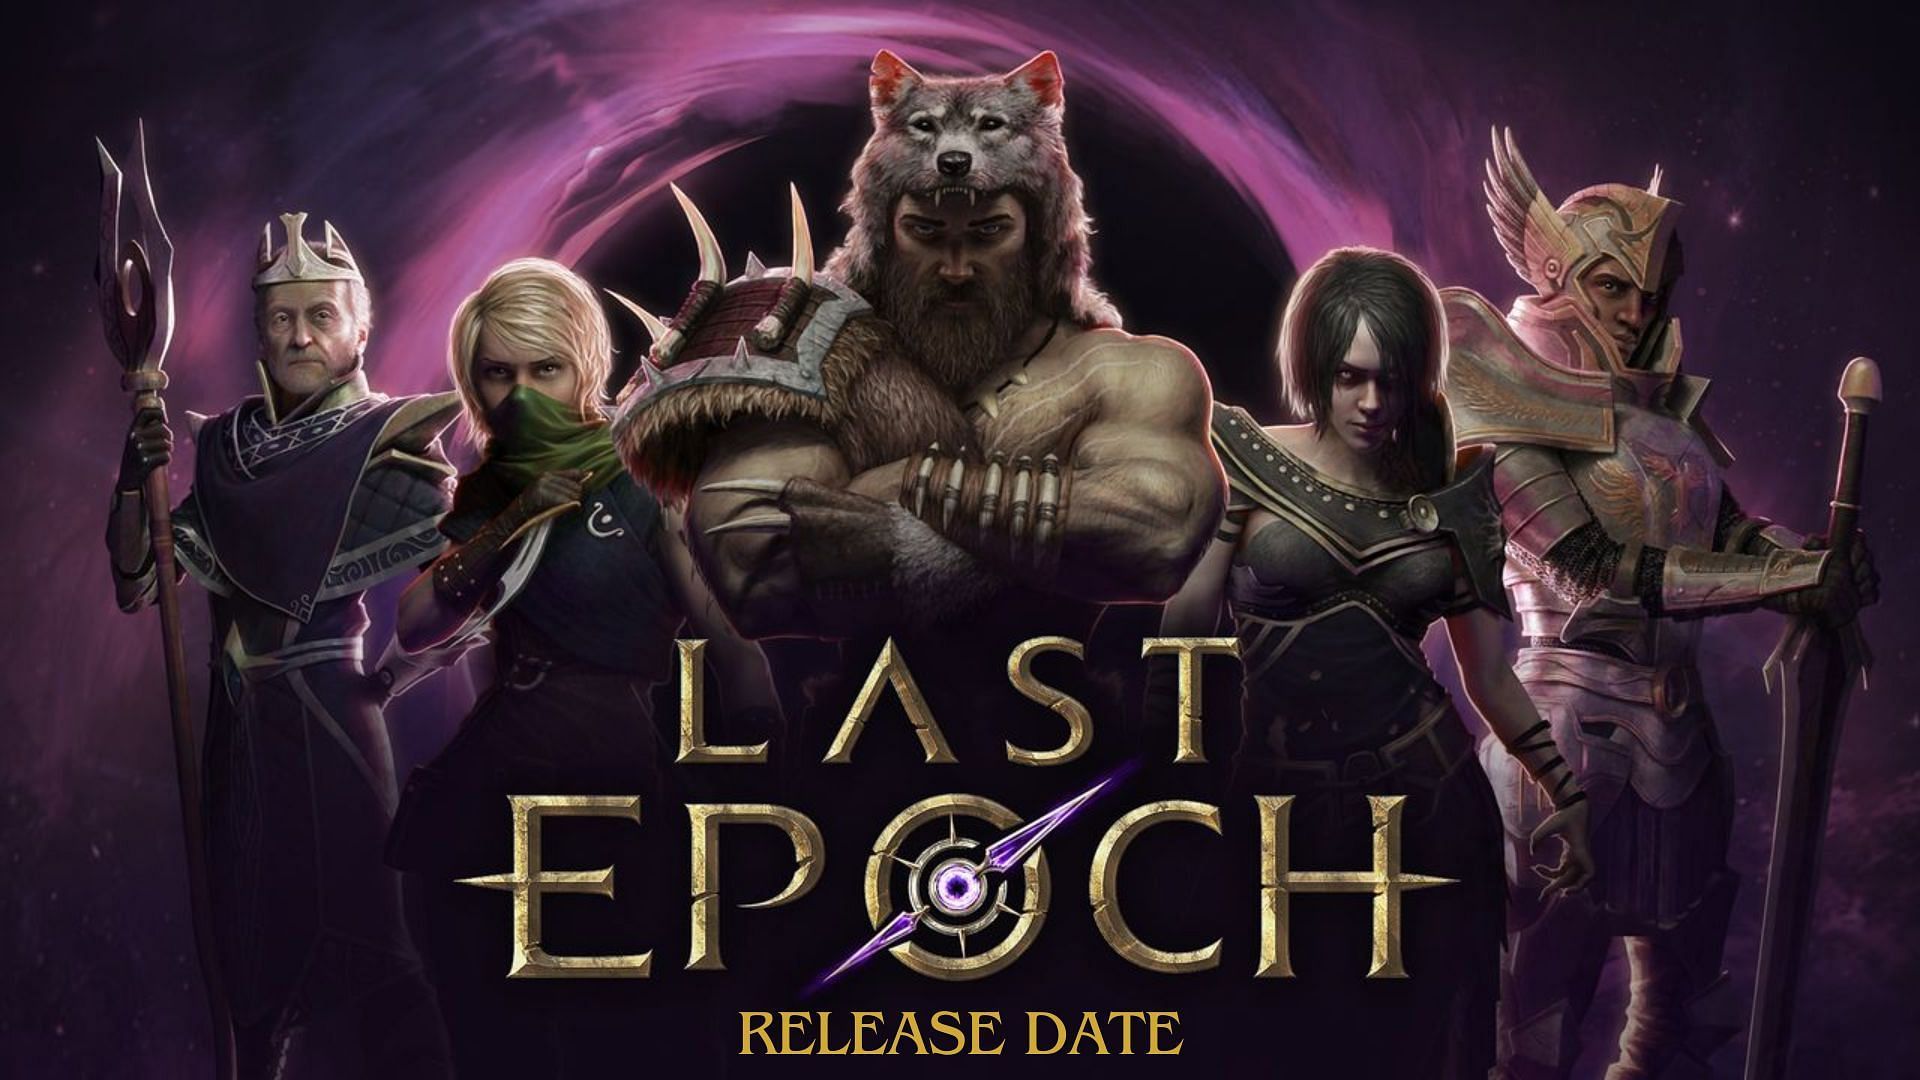 Releast date of  Last Epoch is February 21